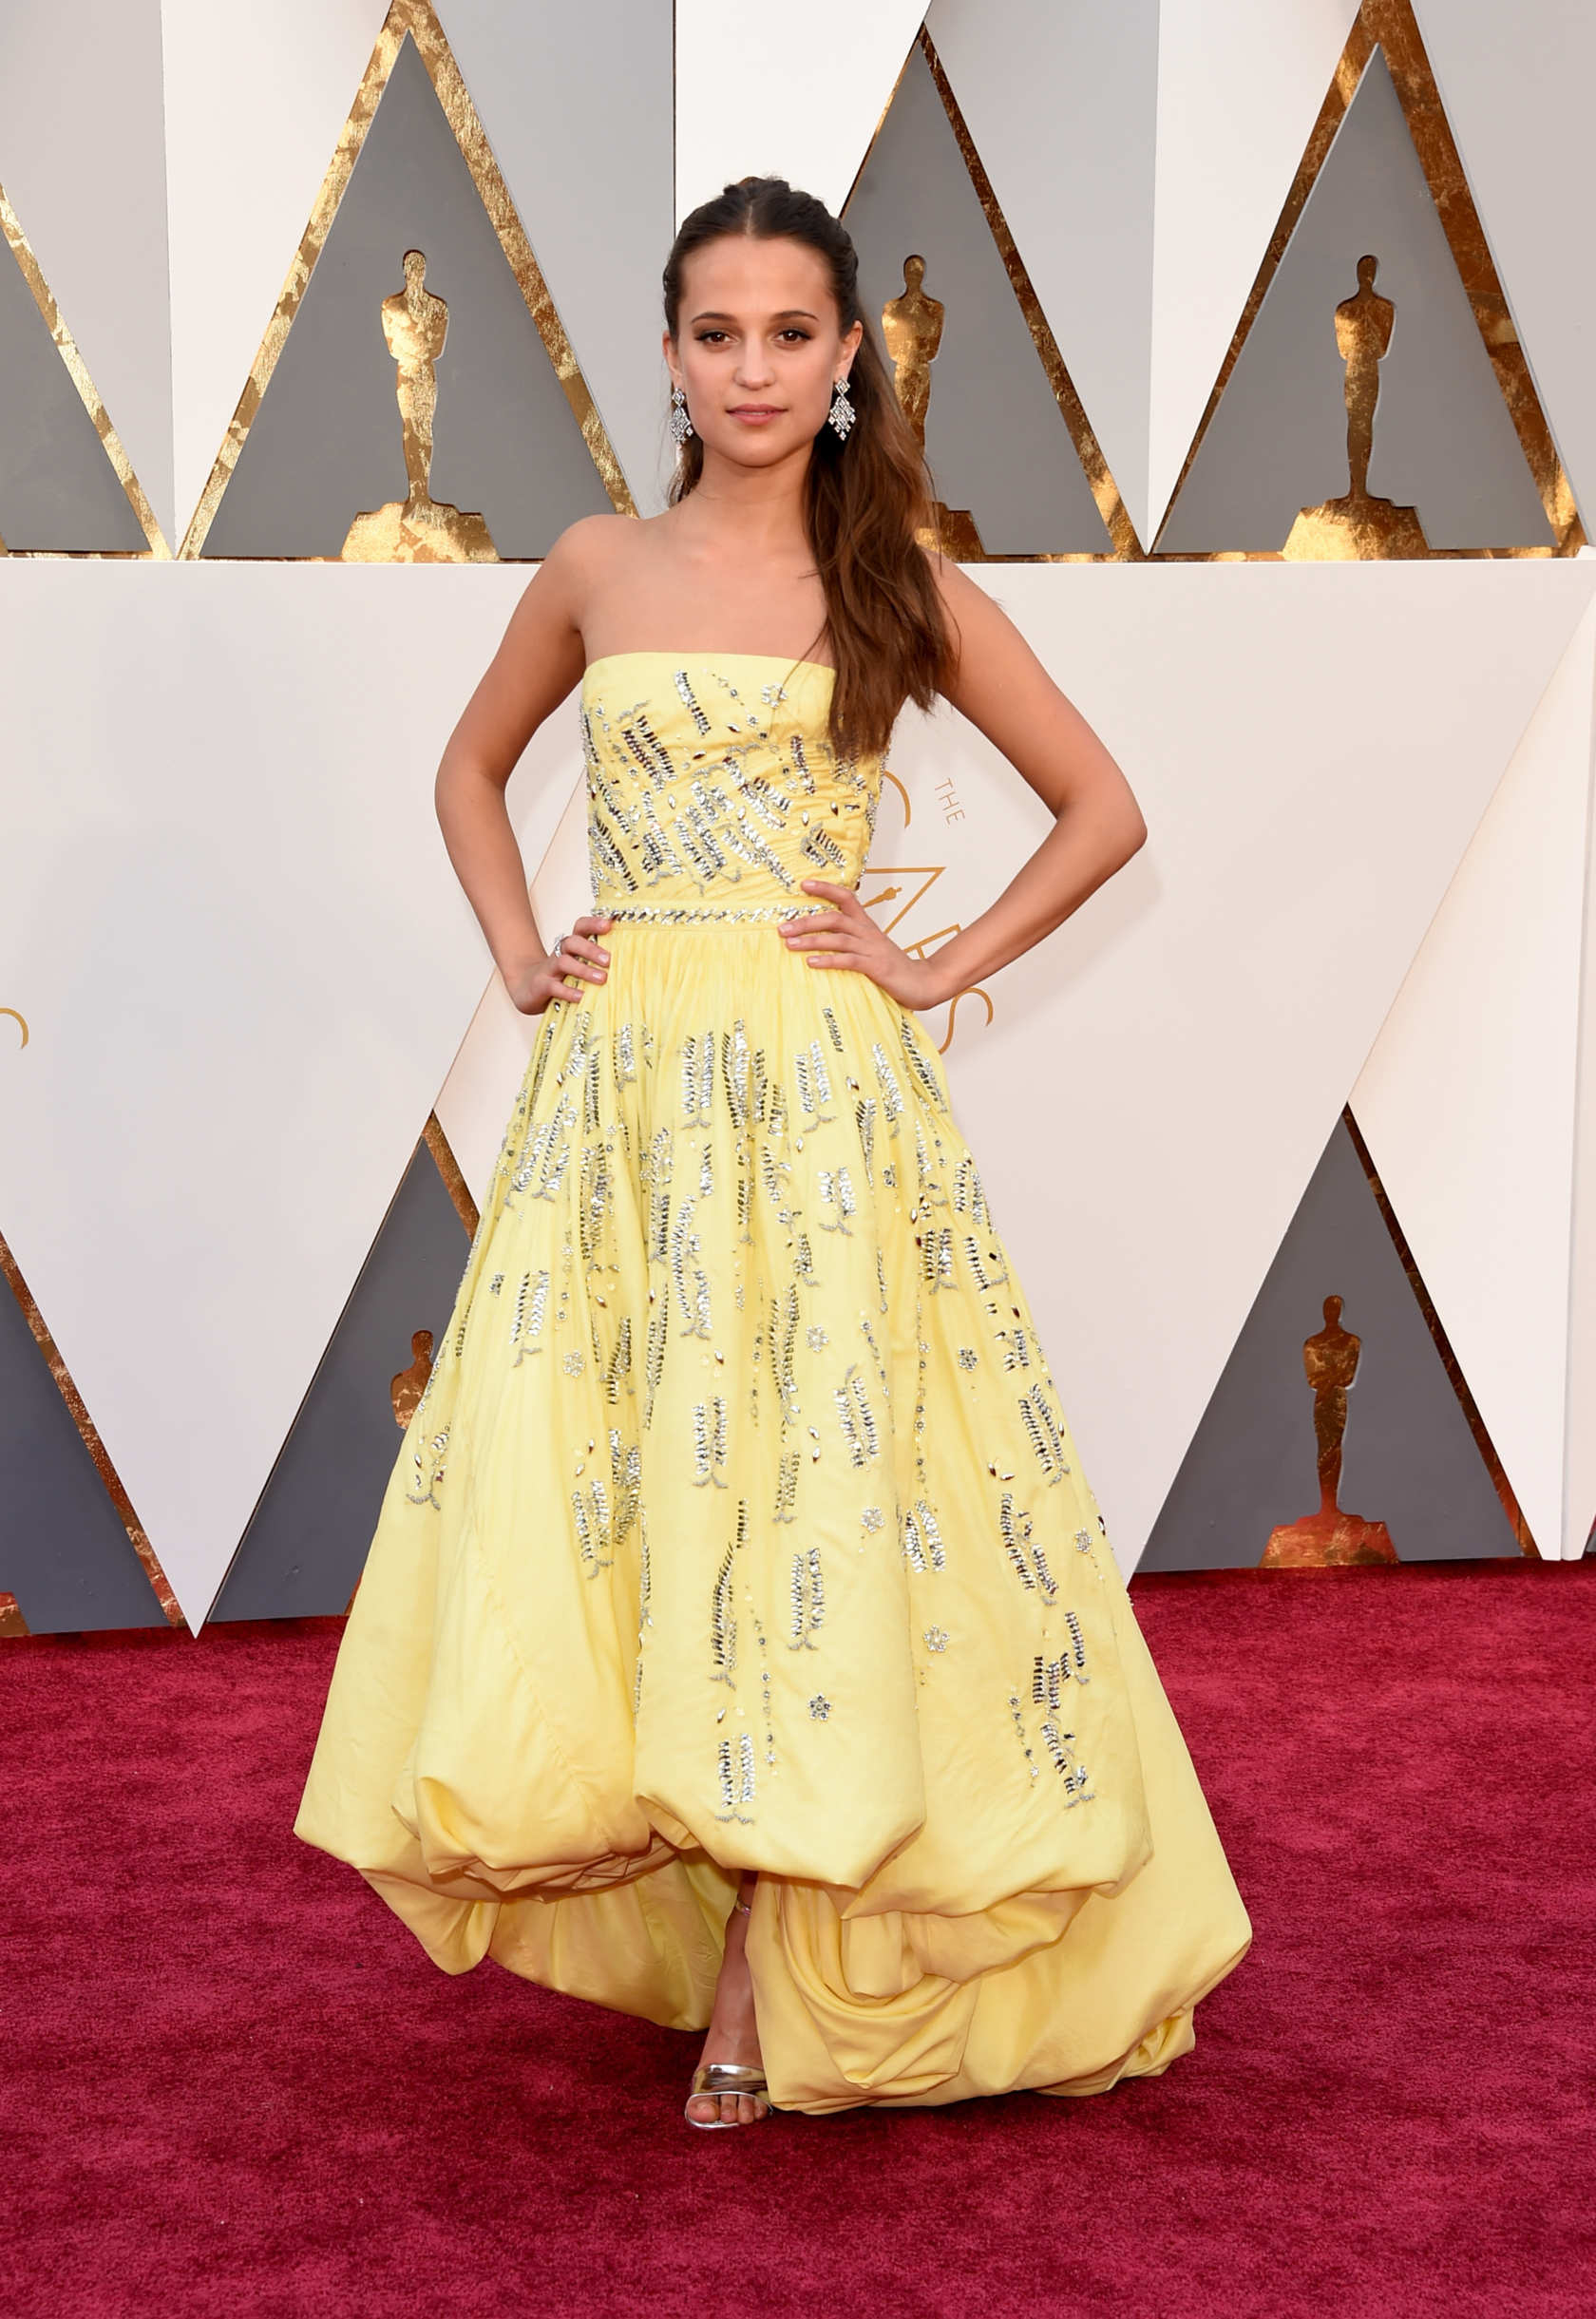 Alicia Vikander’s 2016 Oscar gown